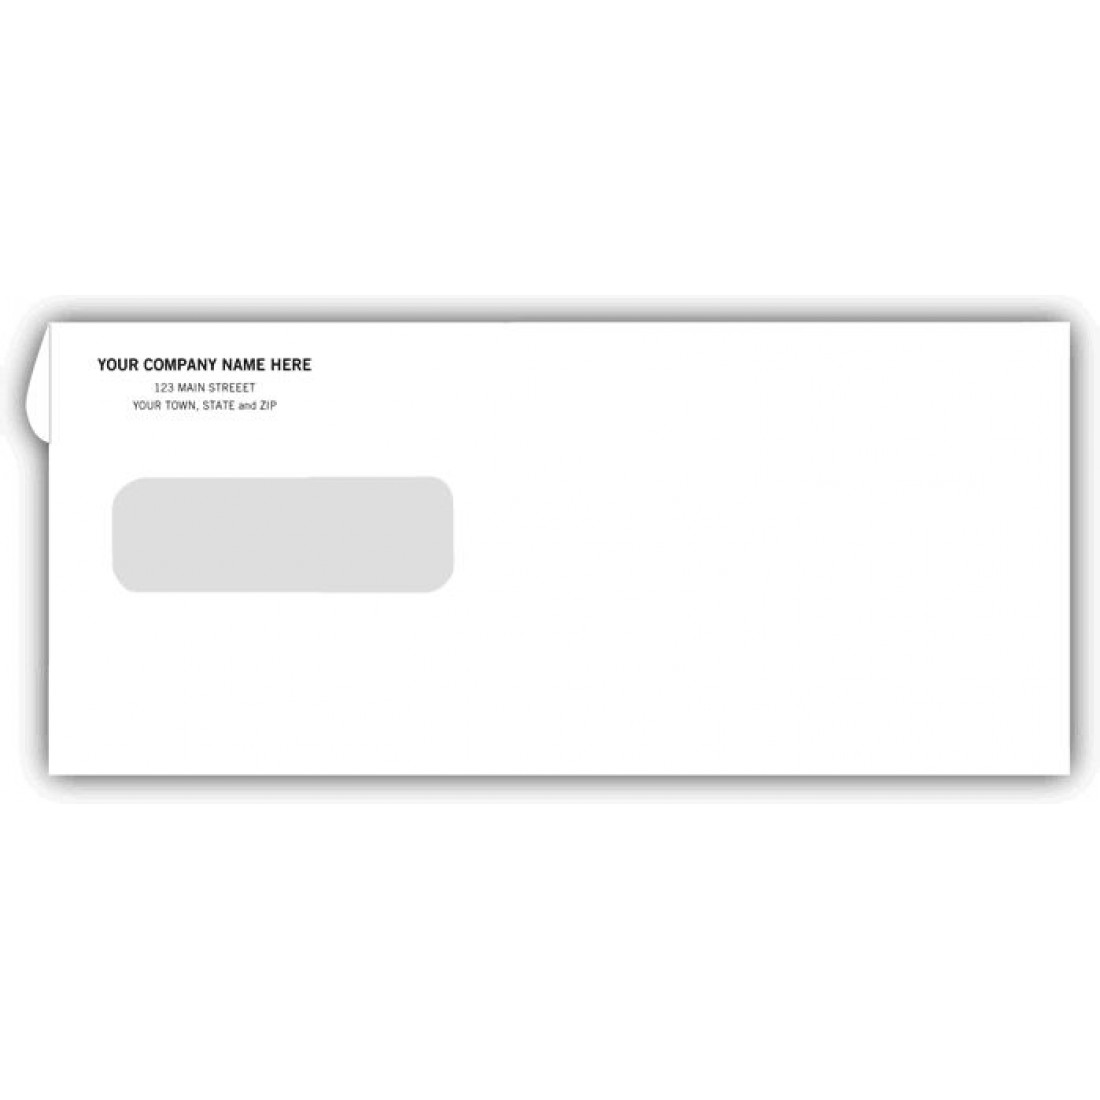 double window envelope address template